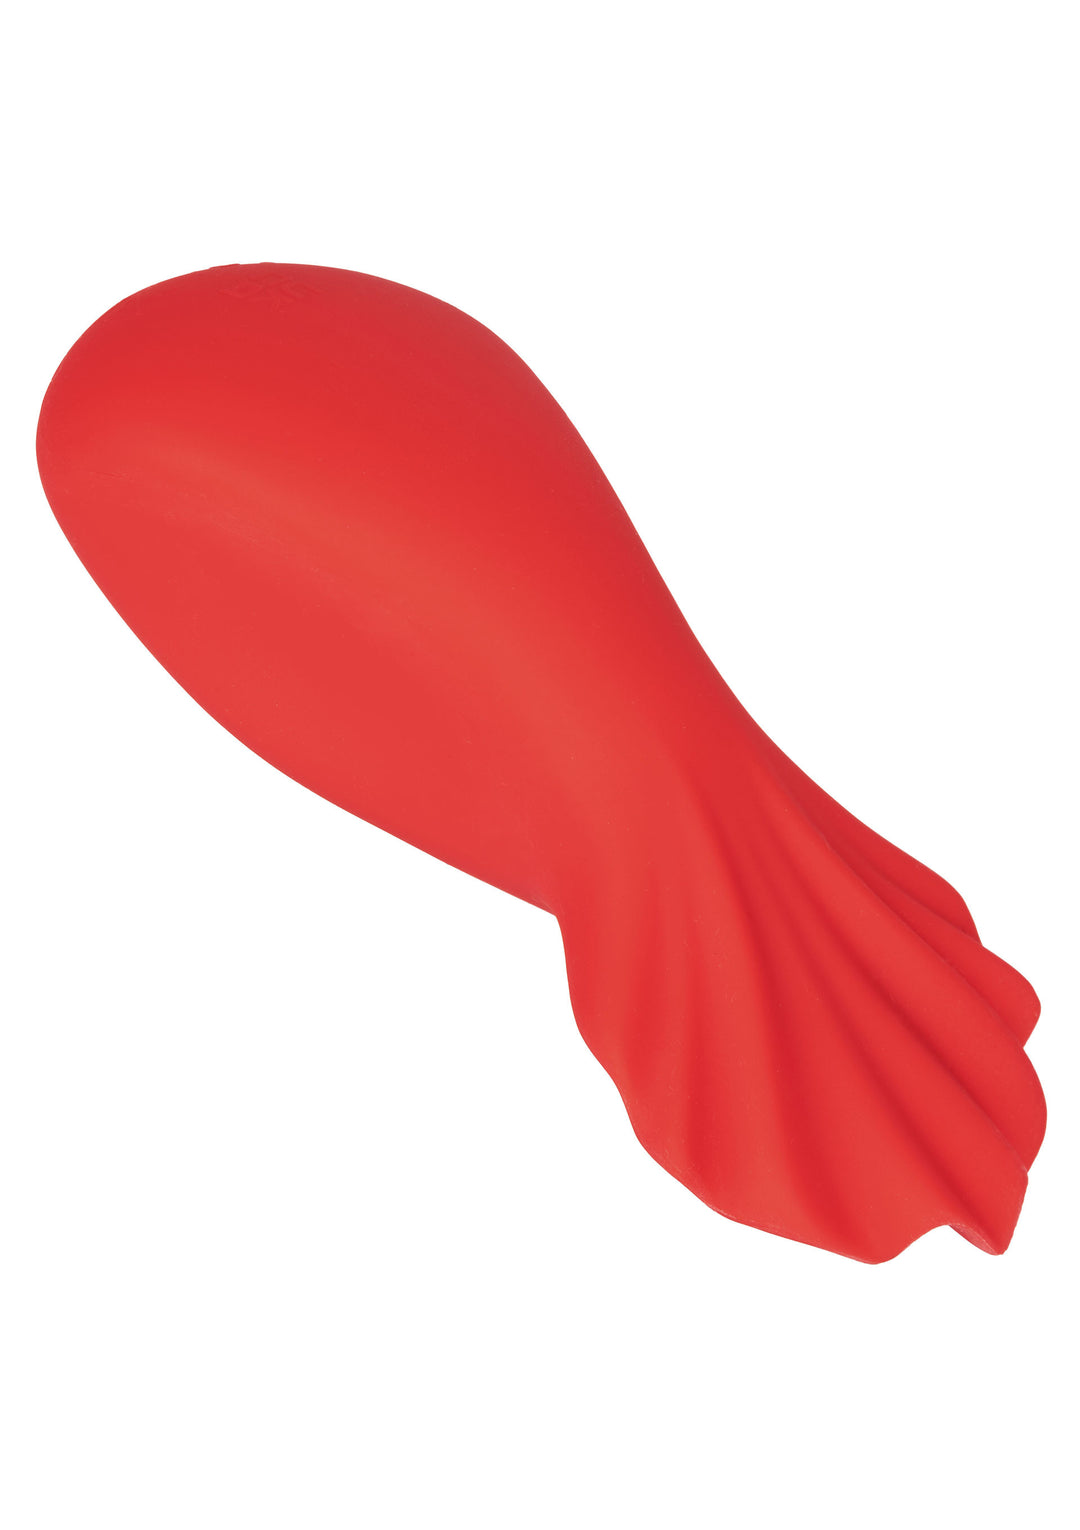 Red Hot Fuego vaginal stimulator